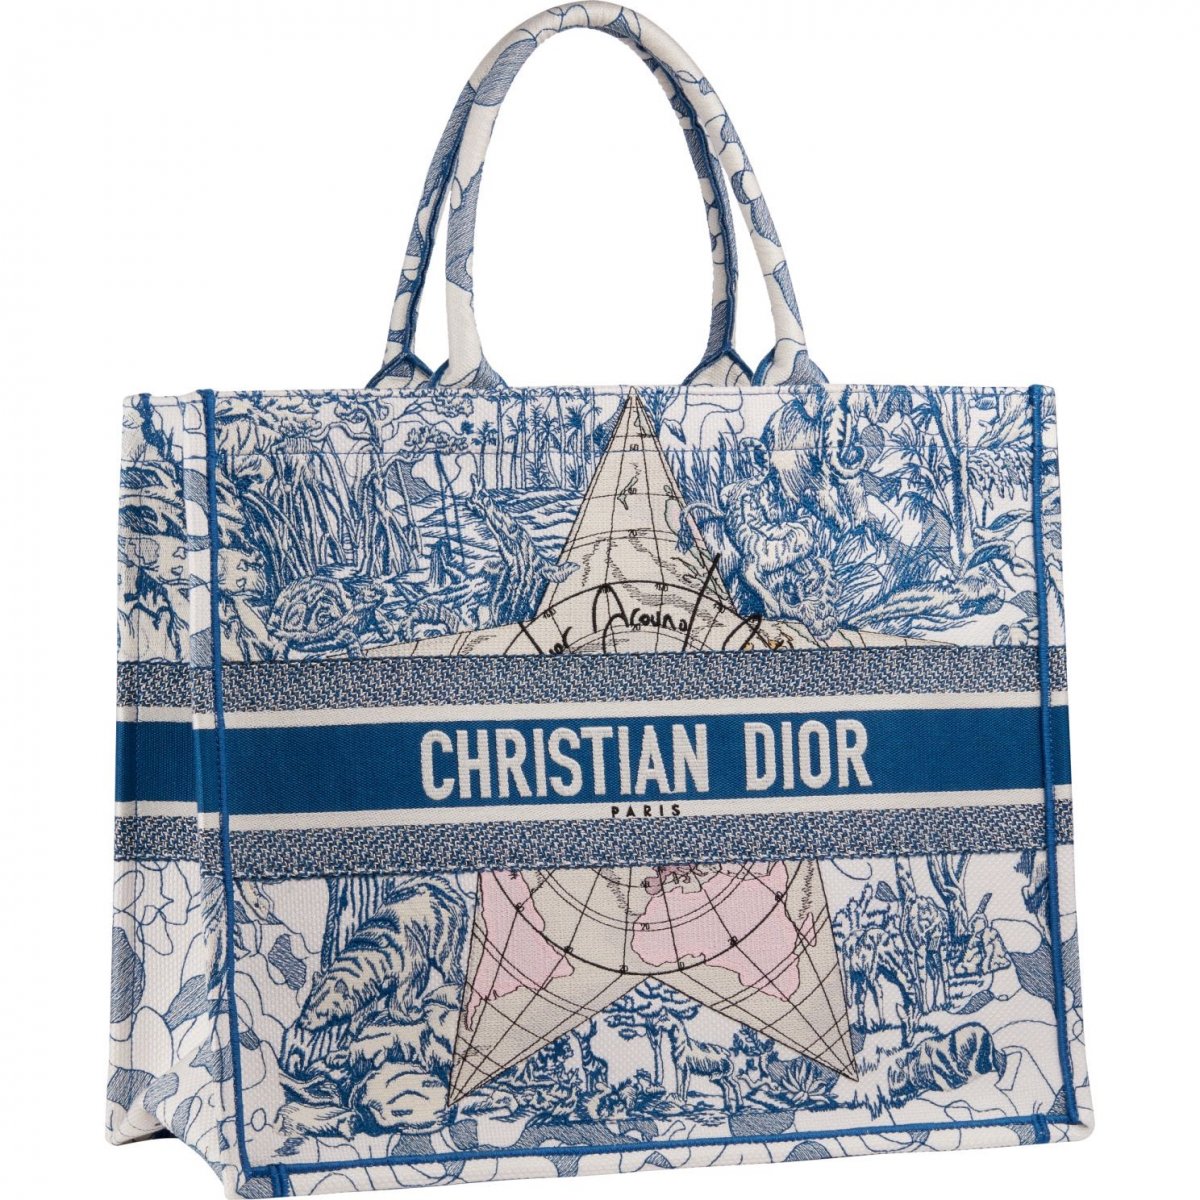 Lady Dior Bag Price List Guide  Brands Blogger